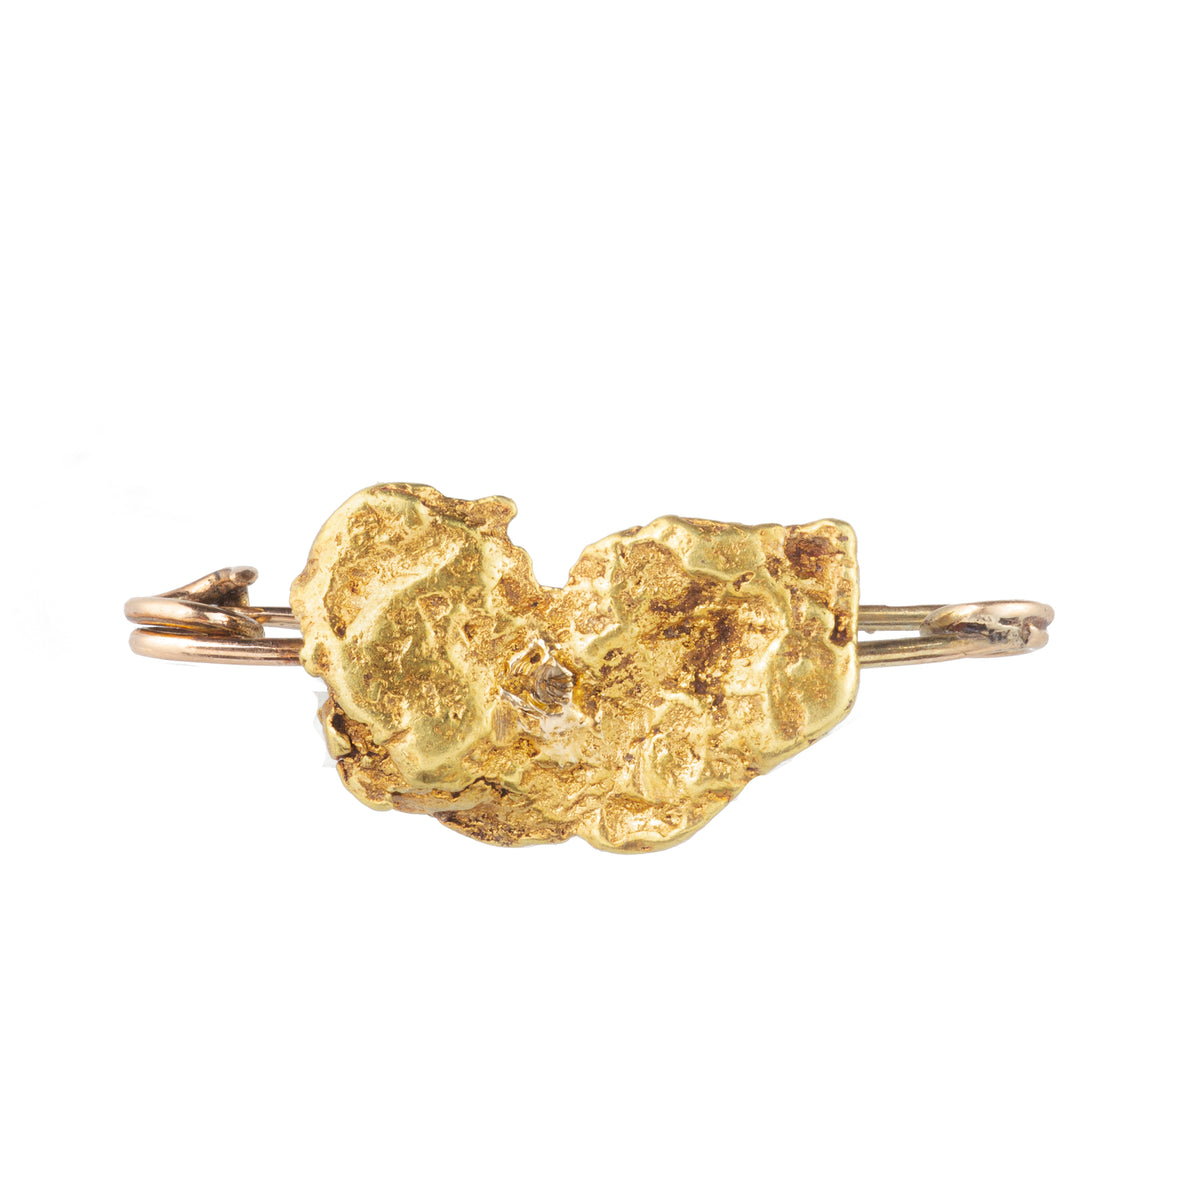 A Twenty-Two Carat Gold Nugget Brooch